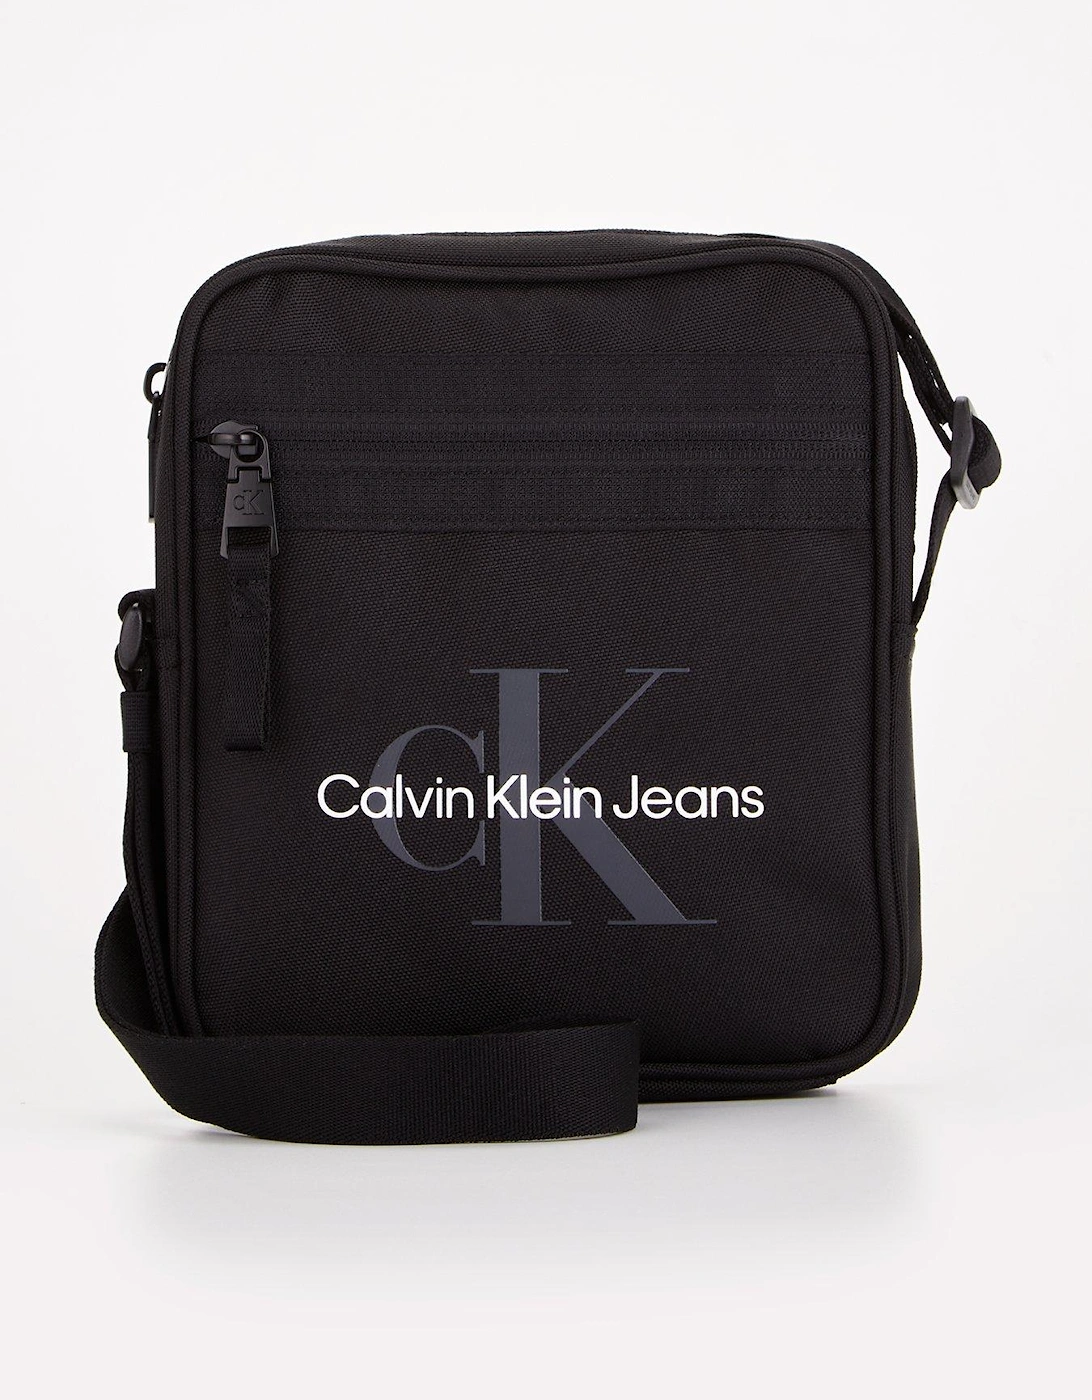 Jeans Sport Essentials Reporter Messenger Bag - Black, 3 of 2